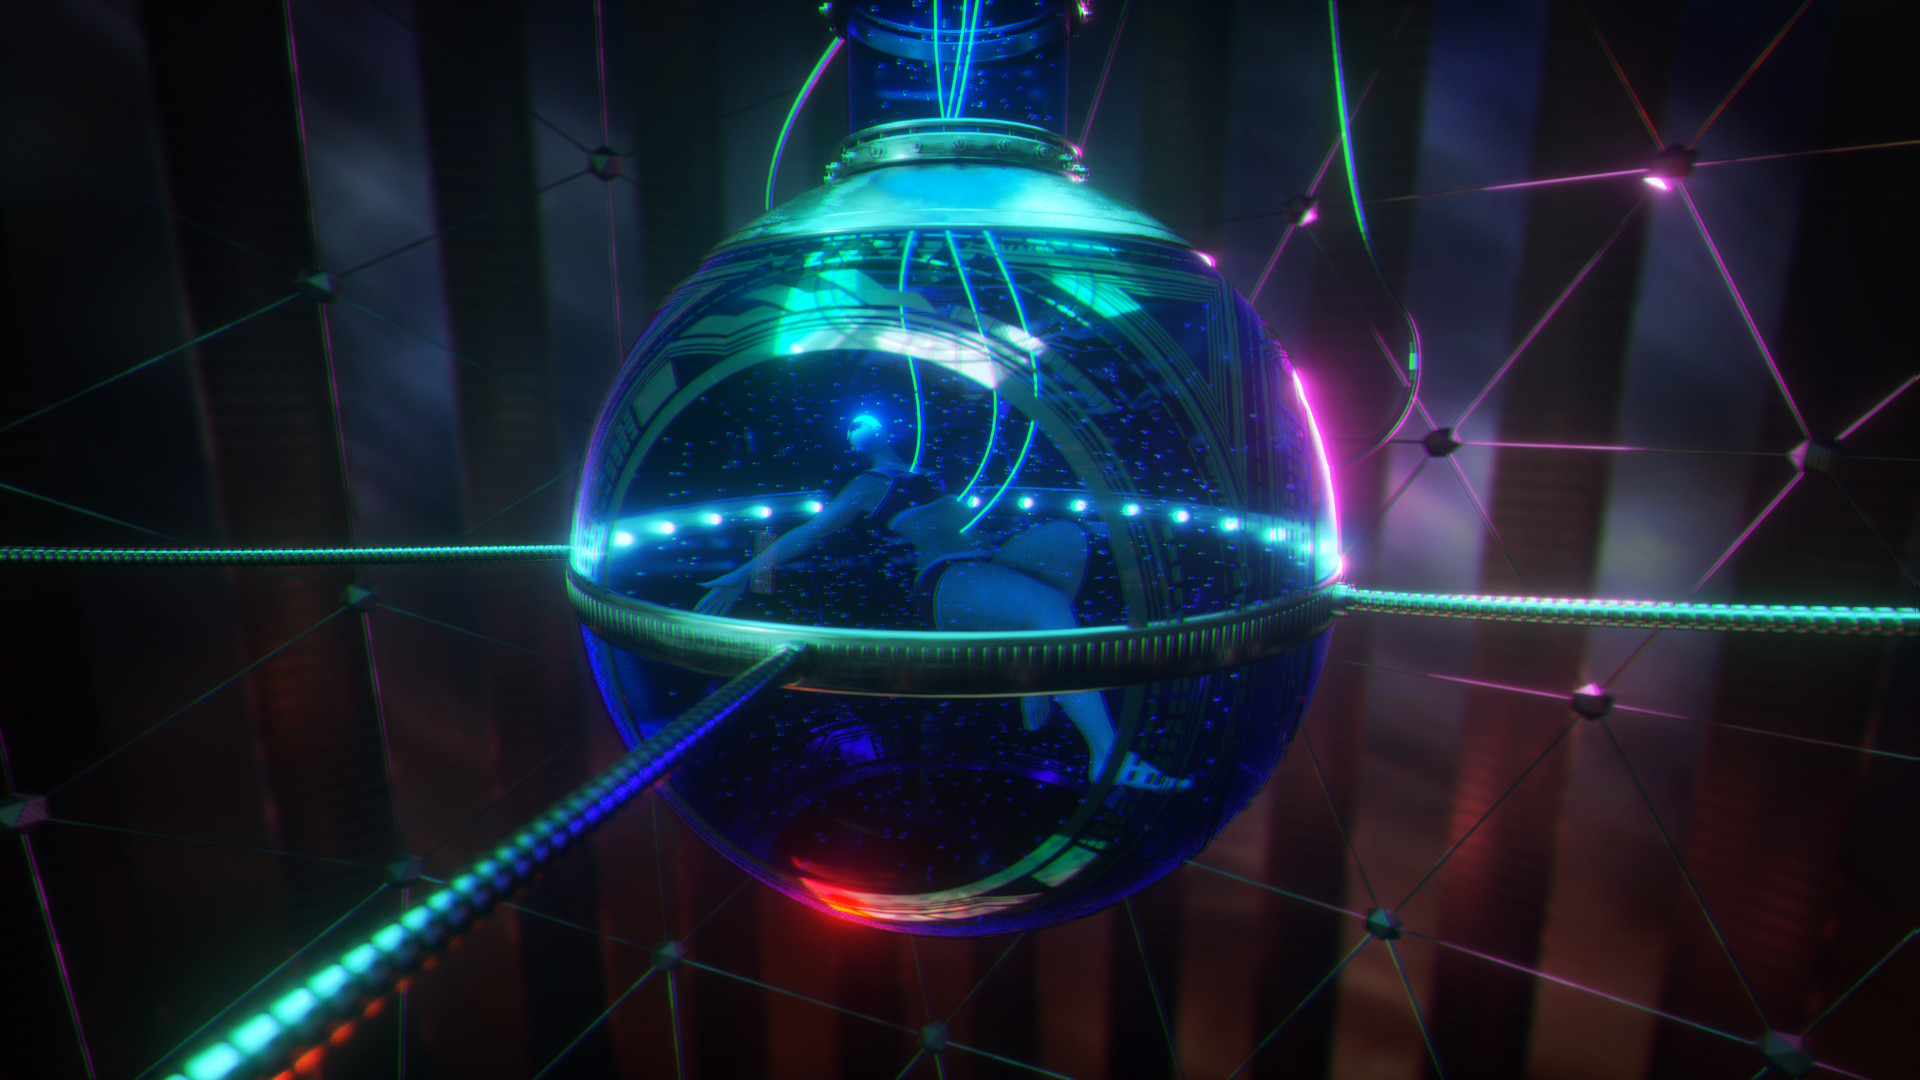 David Legnon Globe Neon Glow Blue Light Grid Glowing Tubes Science Fiction Cyberpunk Digital Art 1920x1080